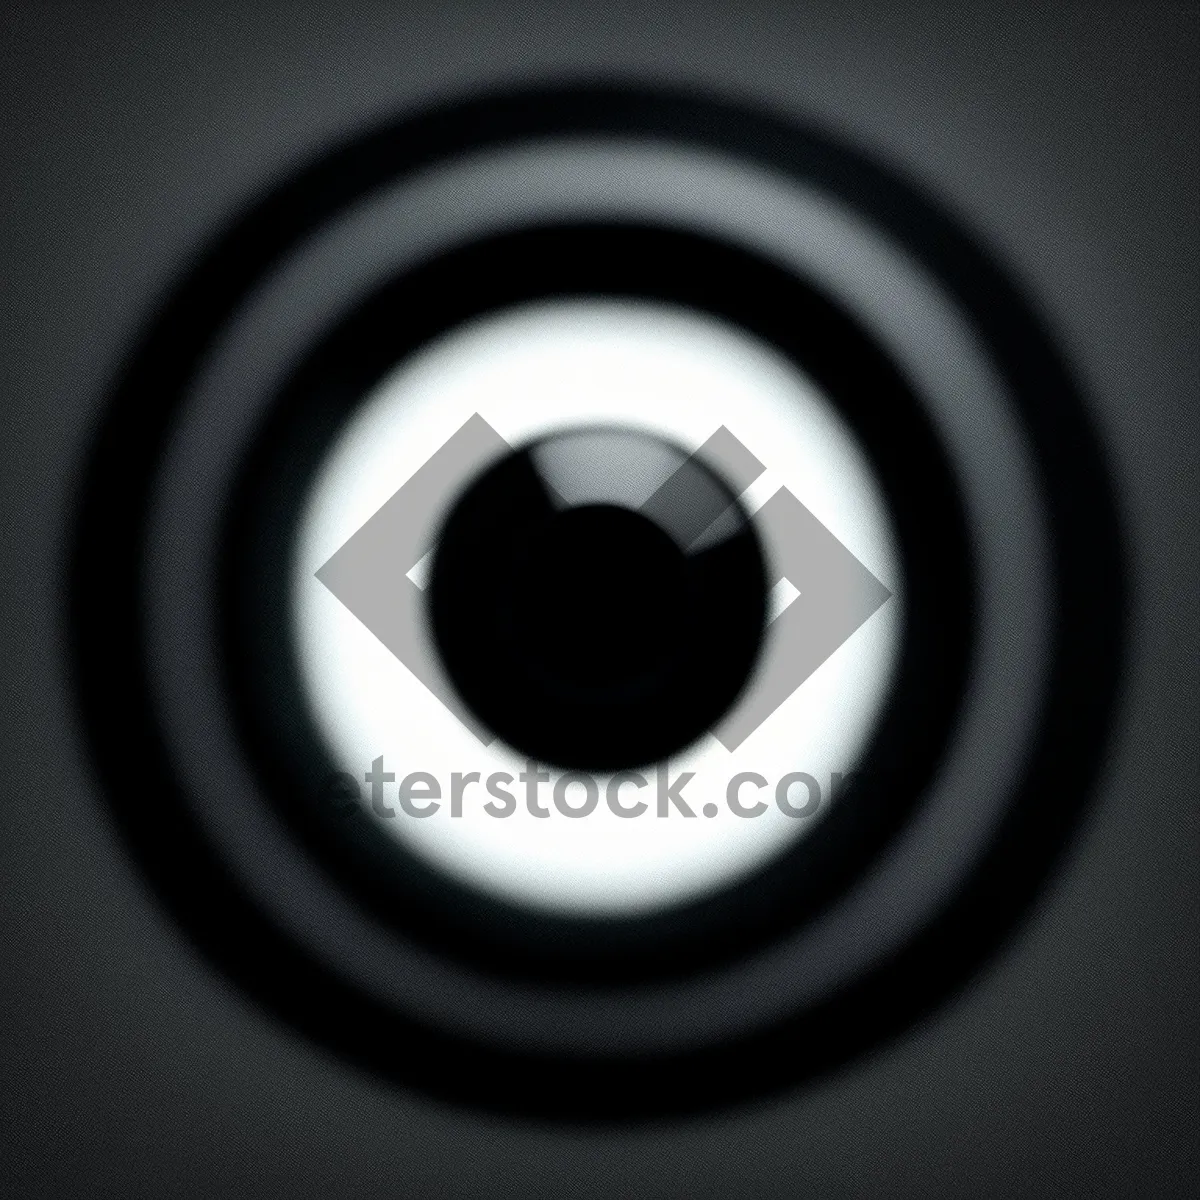 Picture of Digital Aperture Regulator: Shiny Black Circle Design